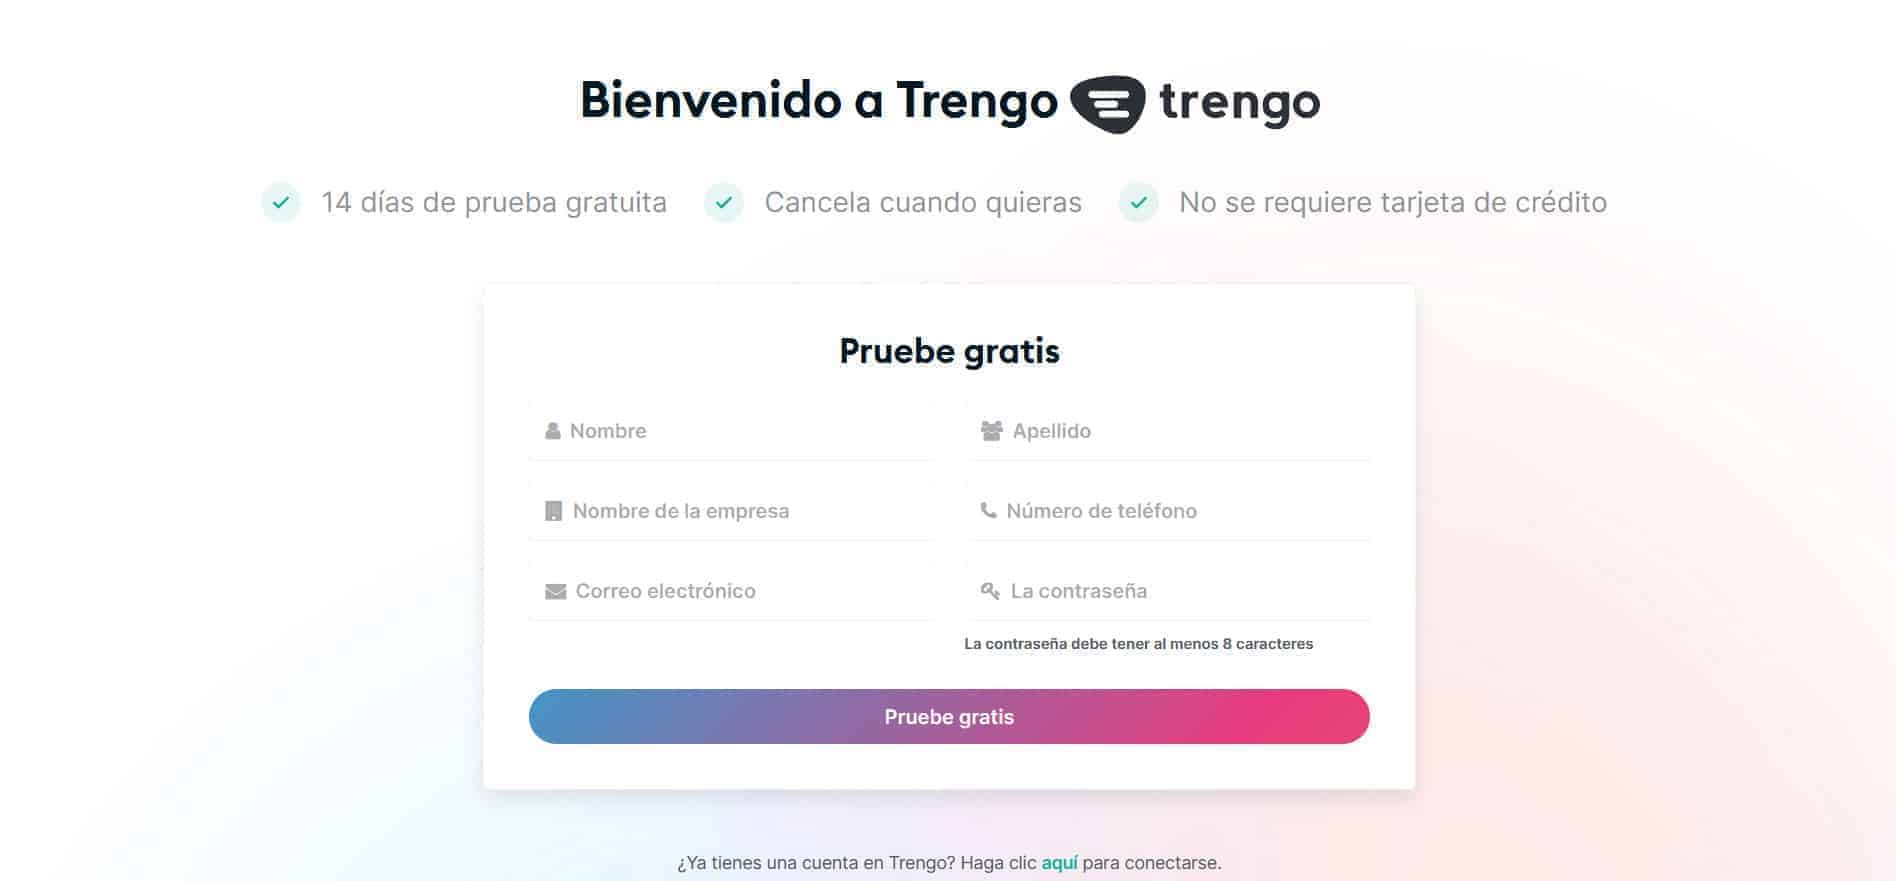 How to register on Trengo